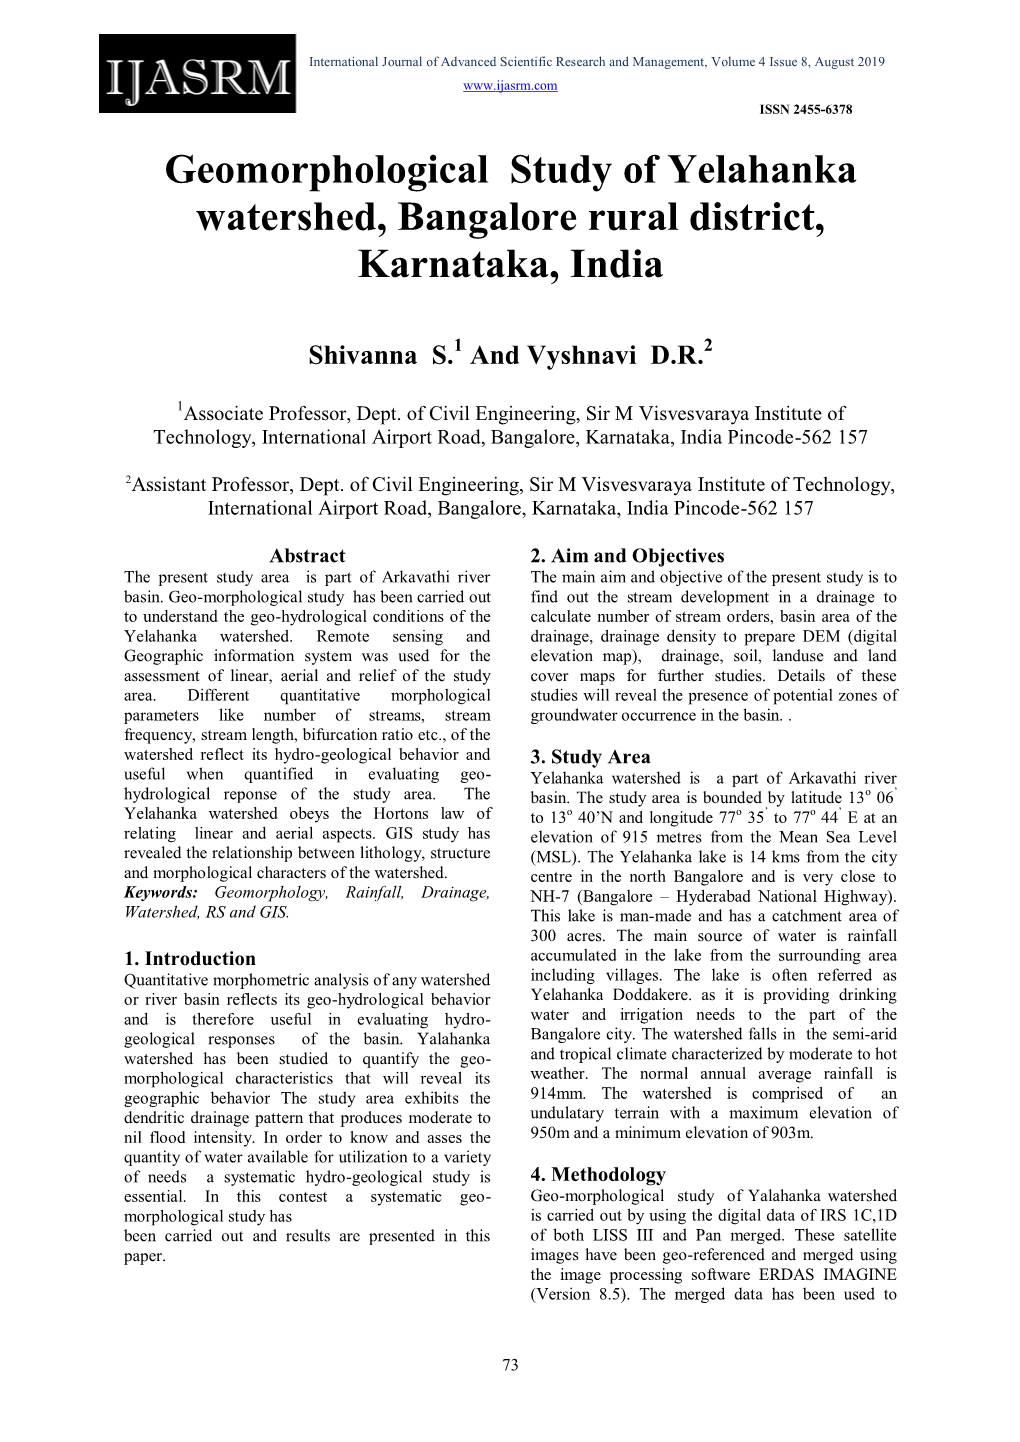 Geomorphological Study of Yelahanka Watershed, Bangalore Rural District, Karnataka, India